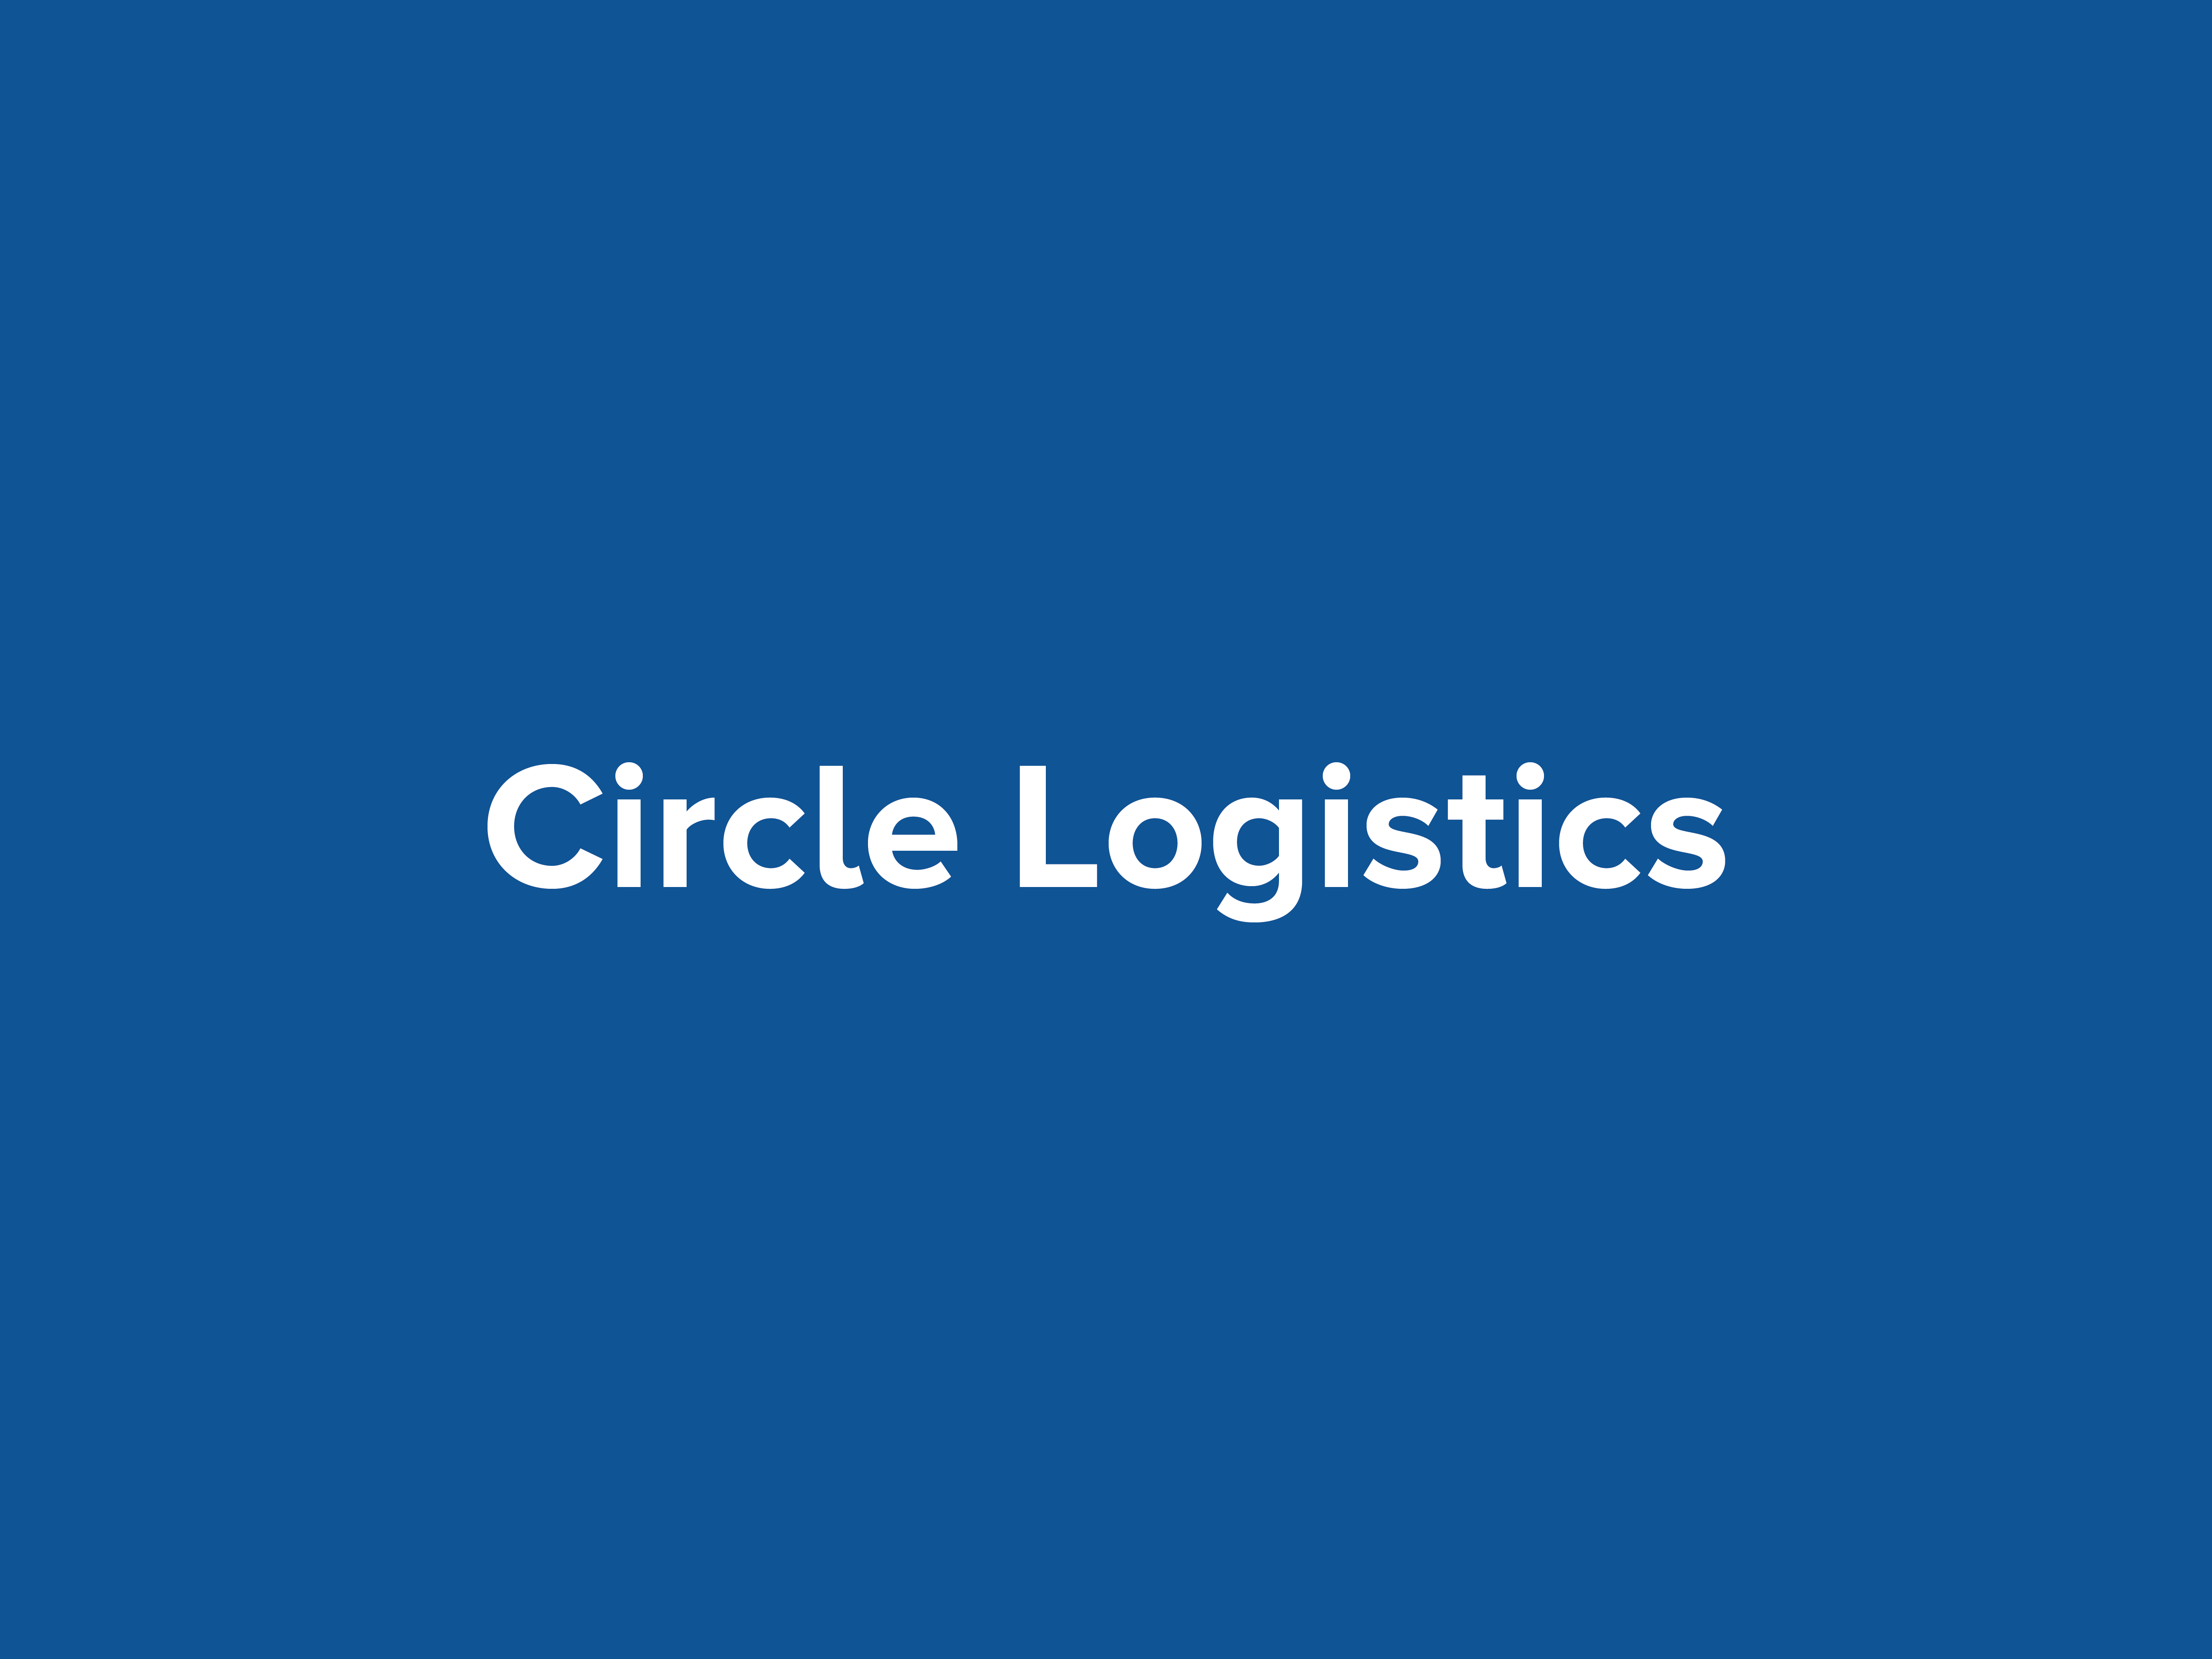 8Circle Logistics